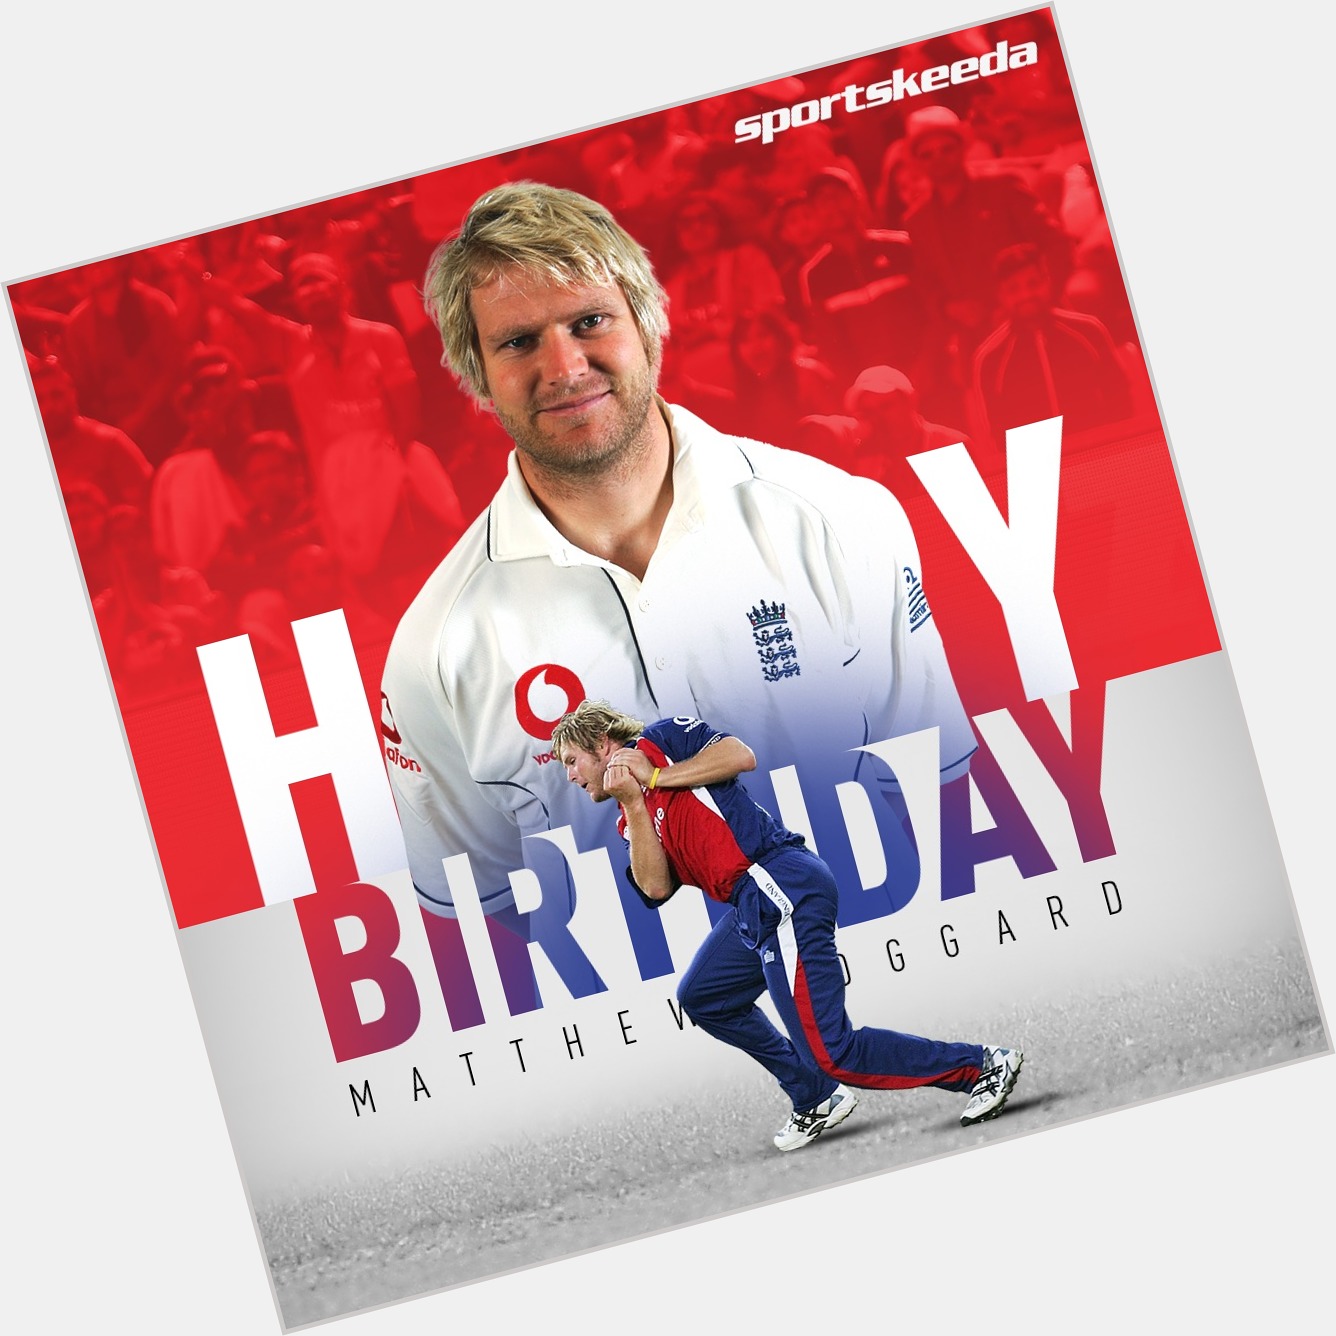  93 international matches  280 wickets

Happy Birthday to the       Pacer, Matthew Hoggard!  